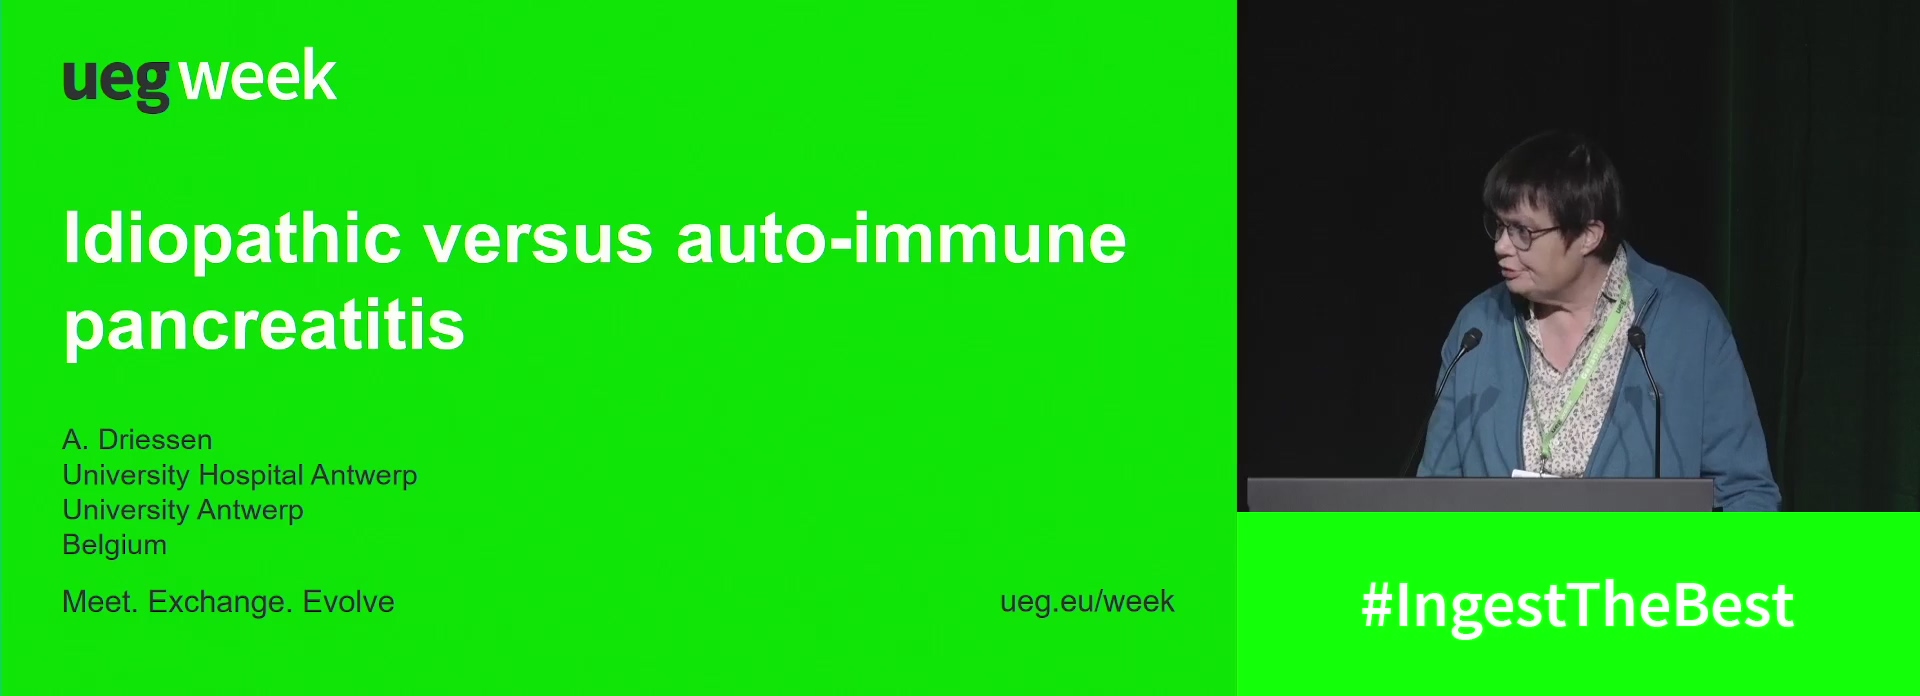 Autoimmune versus idiopathic pancreatitis: A pathologists view